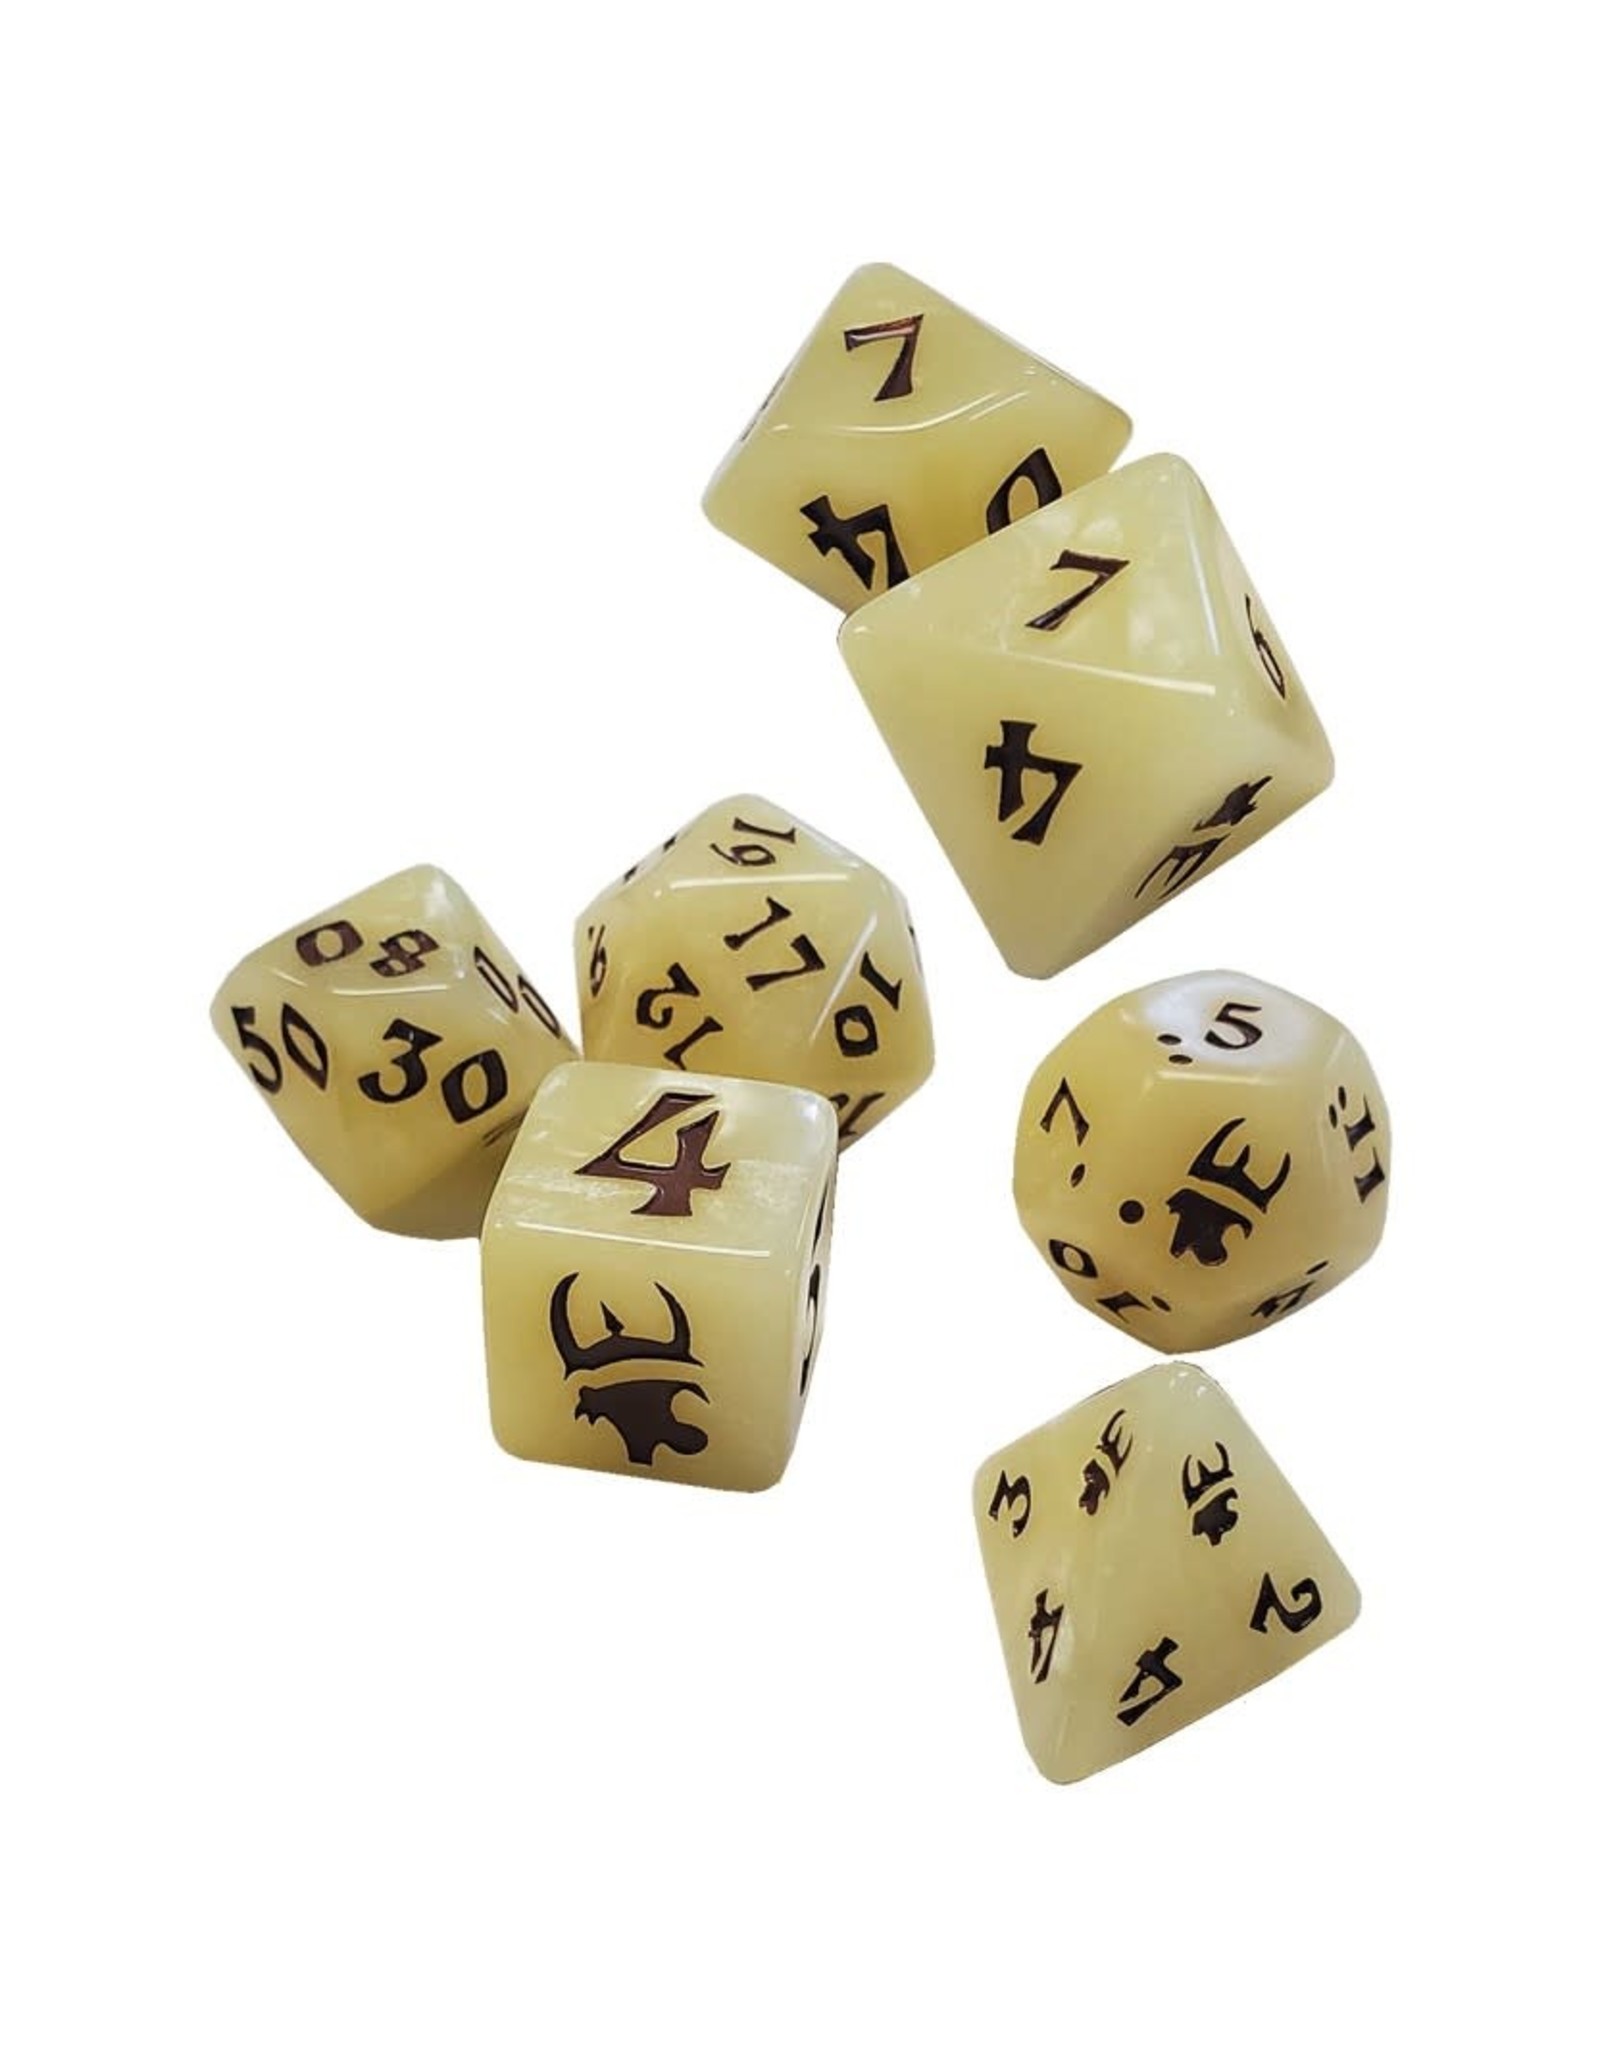 Steve Jackson Games Polyhedral 7 Dice Set: Munchkin - Tan/Brown